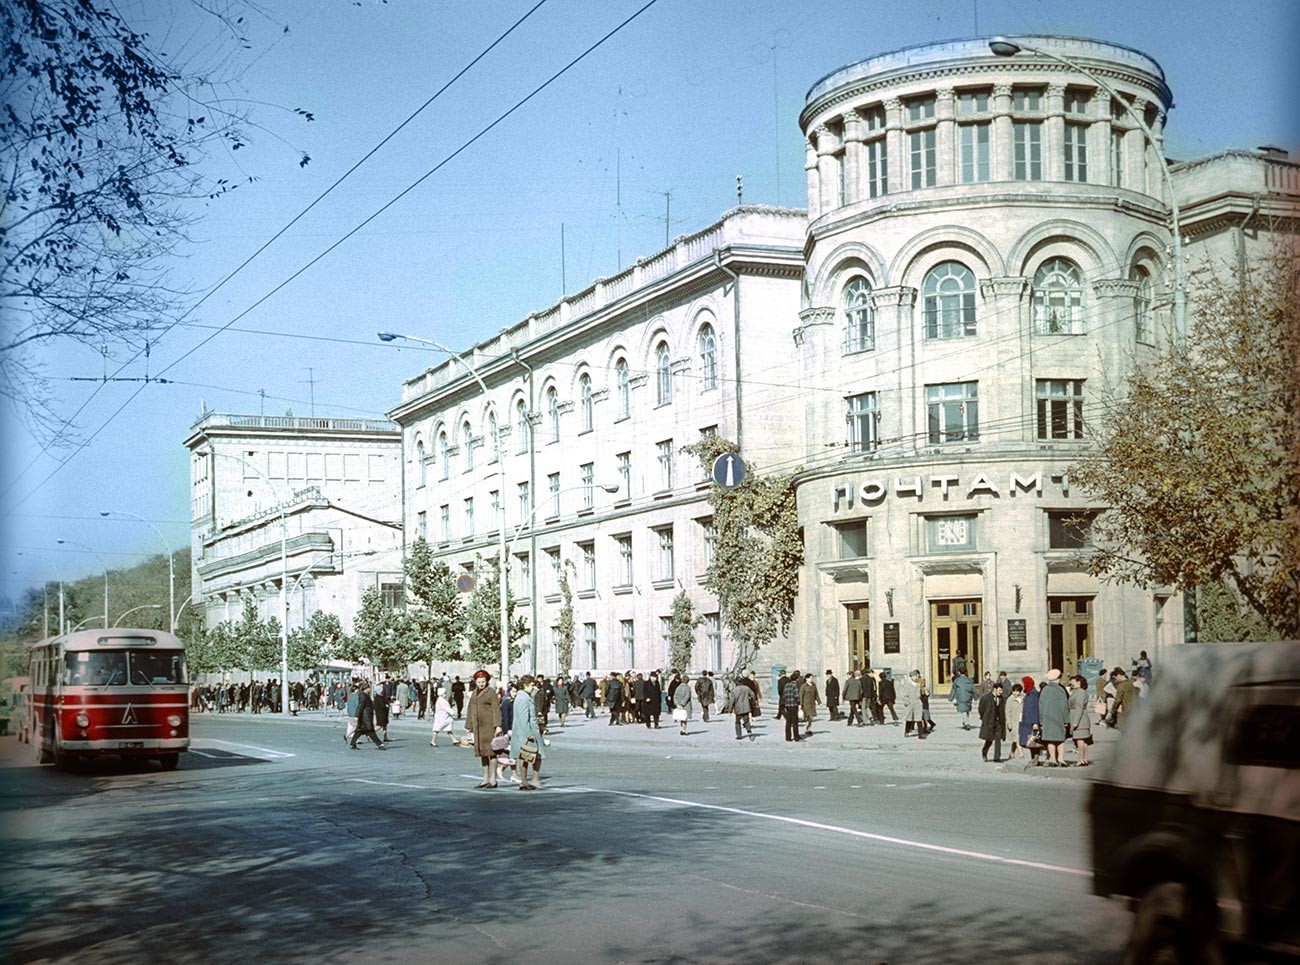 Post Office building in Chisinau, 1972.